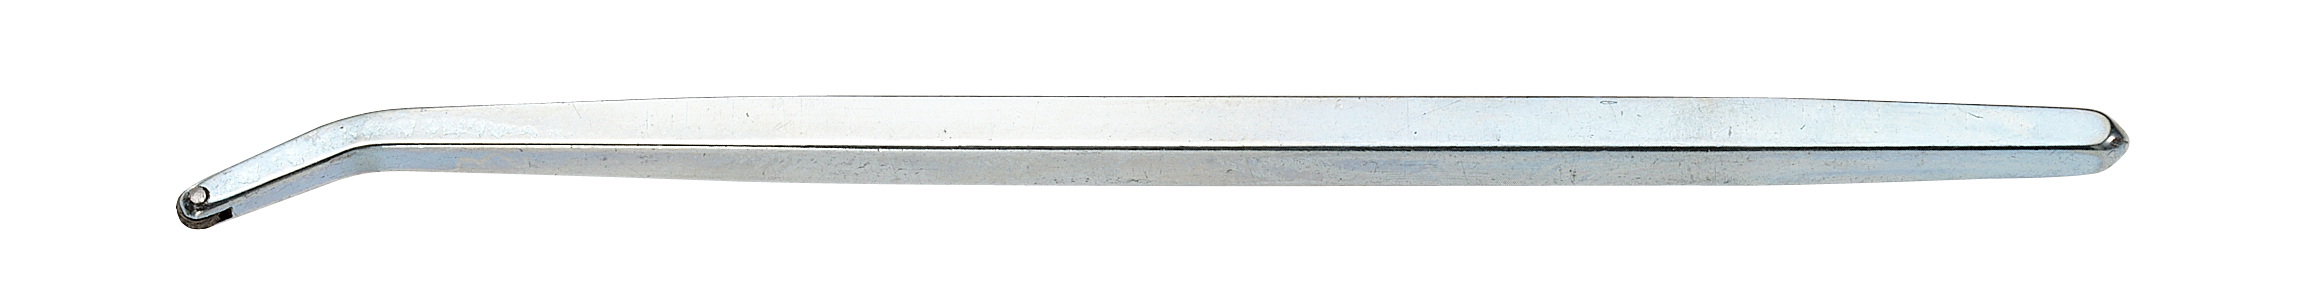 Millgrain tool Type 7 coarse